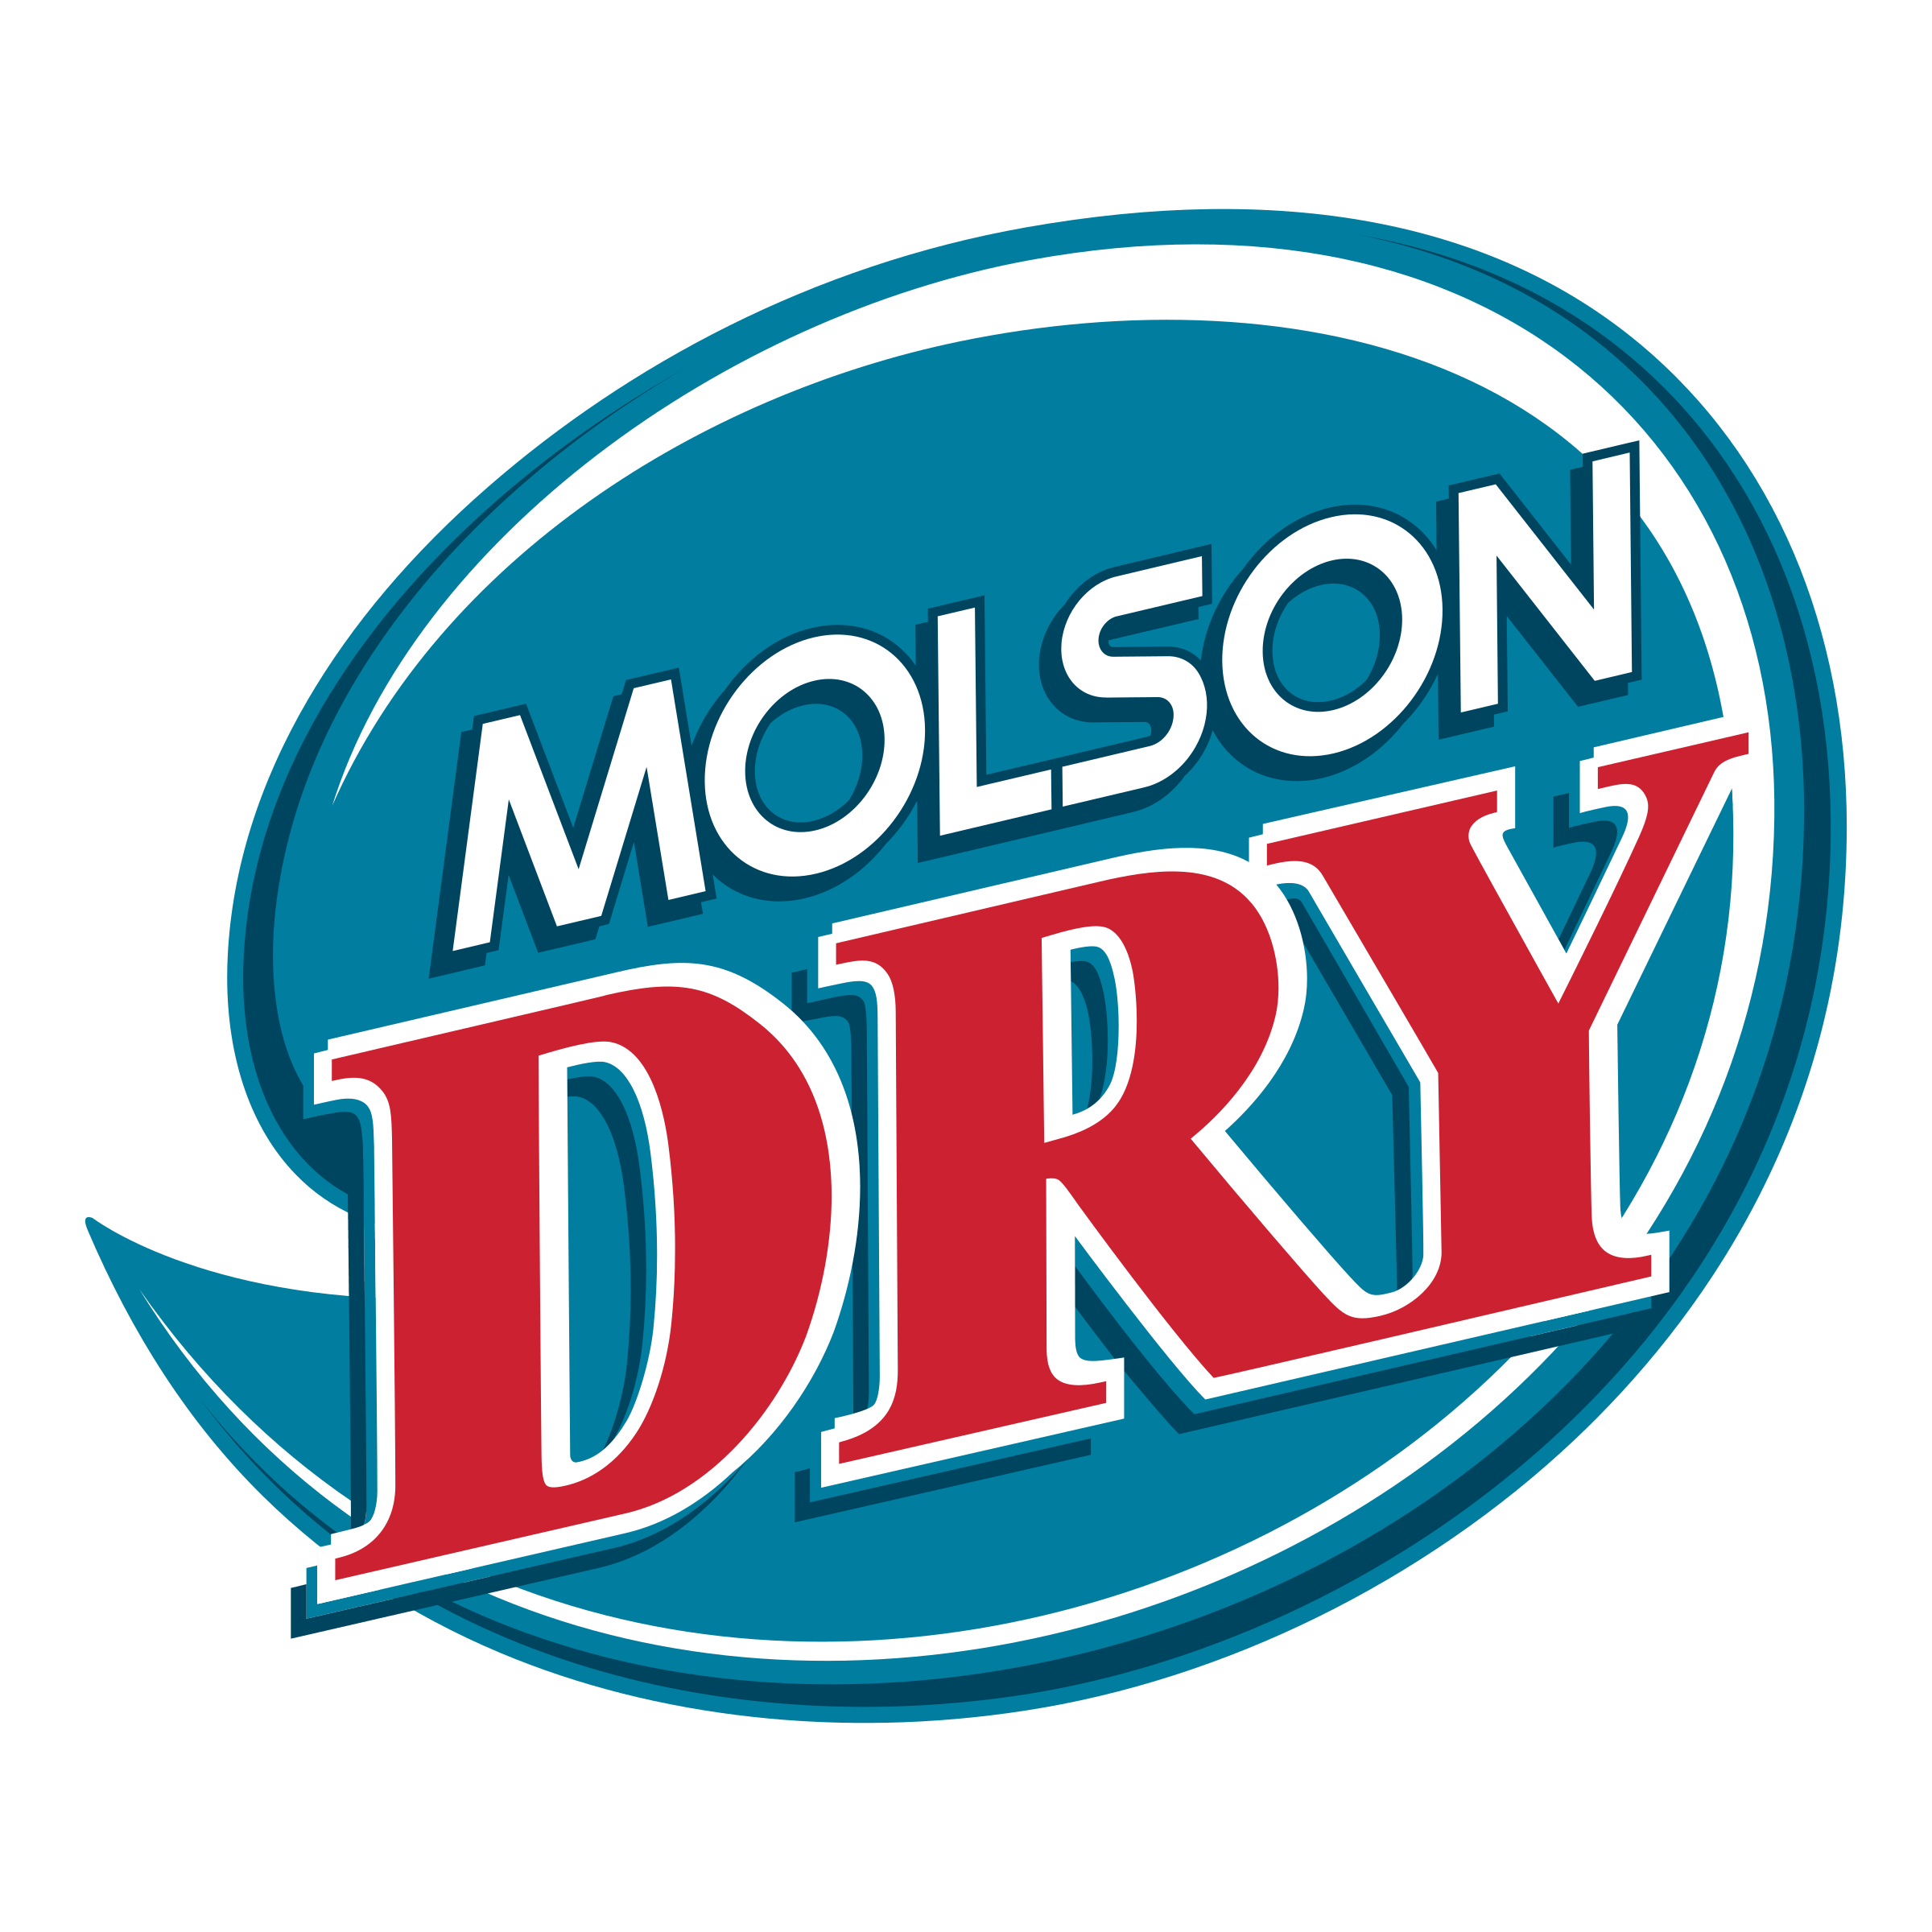 Molson Logo - Molson Dry Logo PNG Transparent & SVG Vector - Freebie Supply